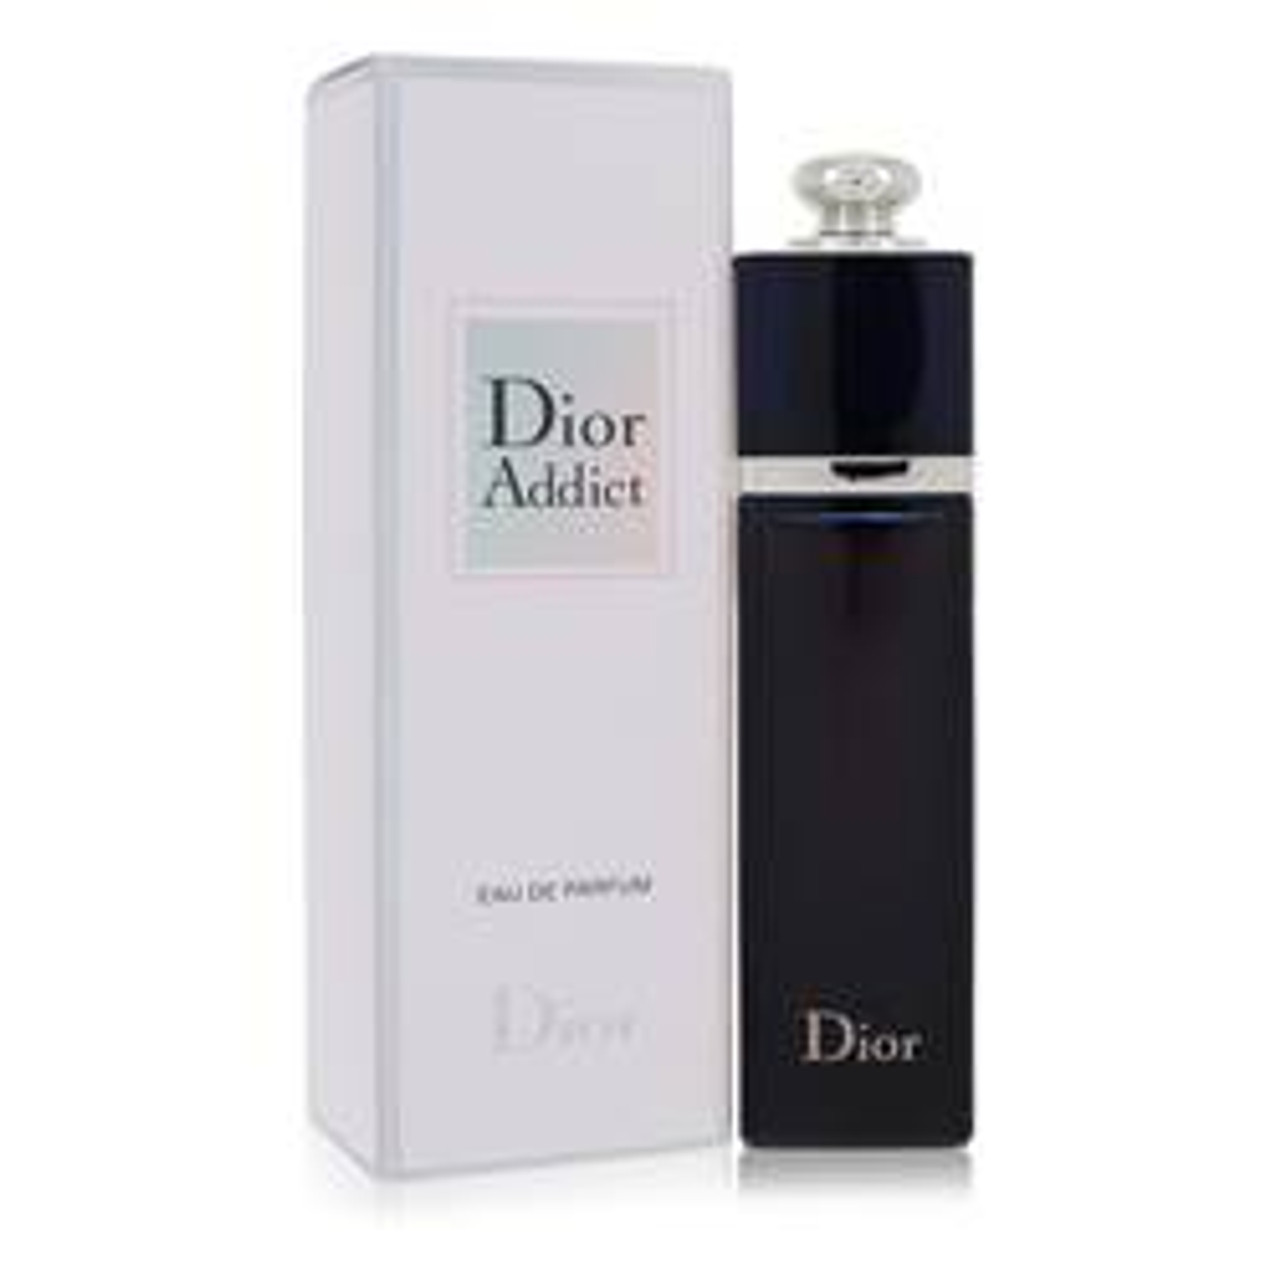 Dior Addict Perfume By Christian Dior Eau De Parfum Spray 1.7 oz for Women - *Pre-Order